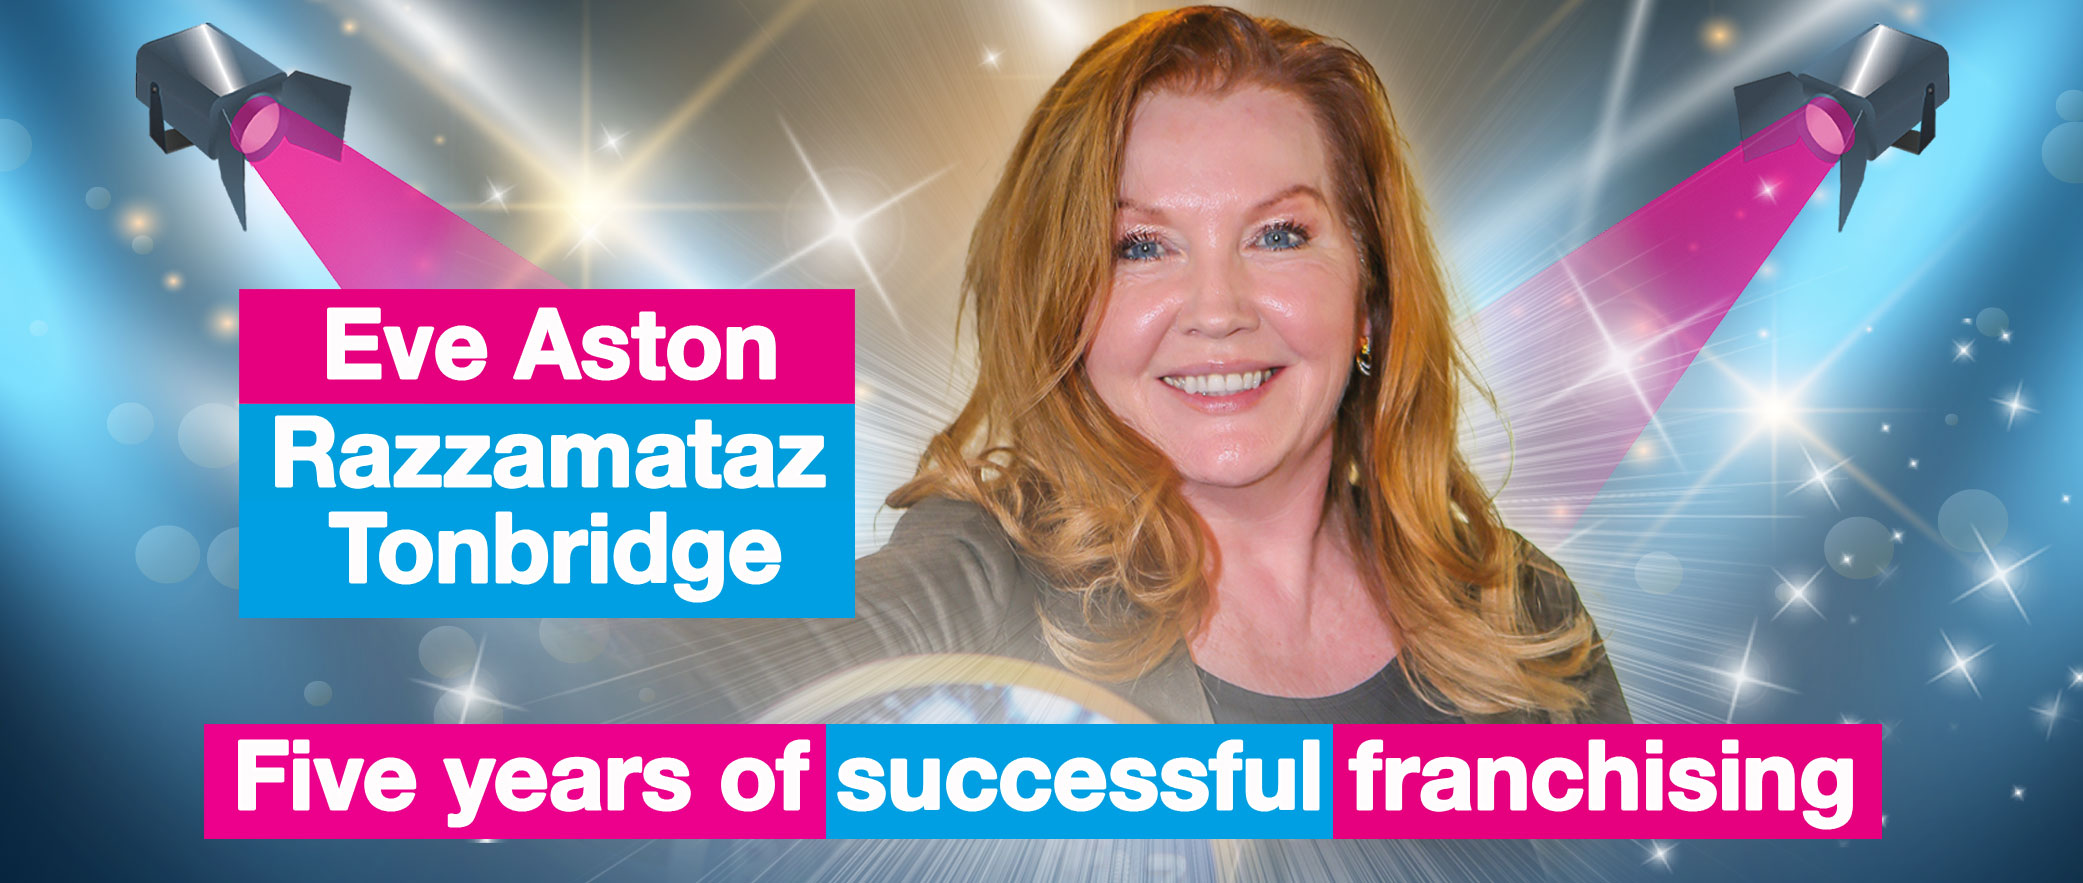 Eve Aston Five years of successful Razzamataz franchising